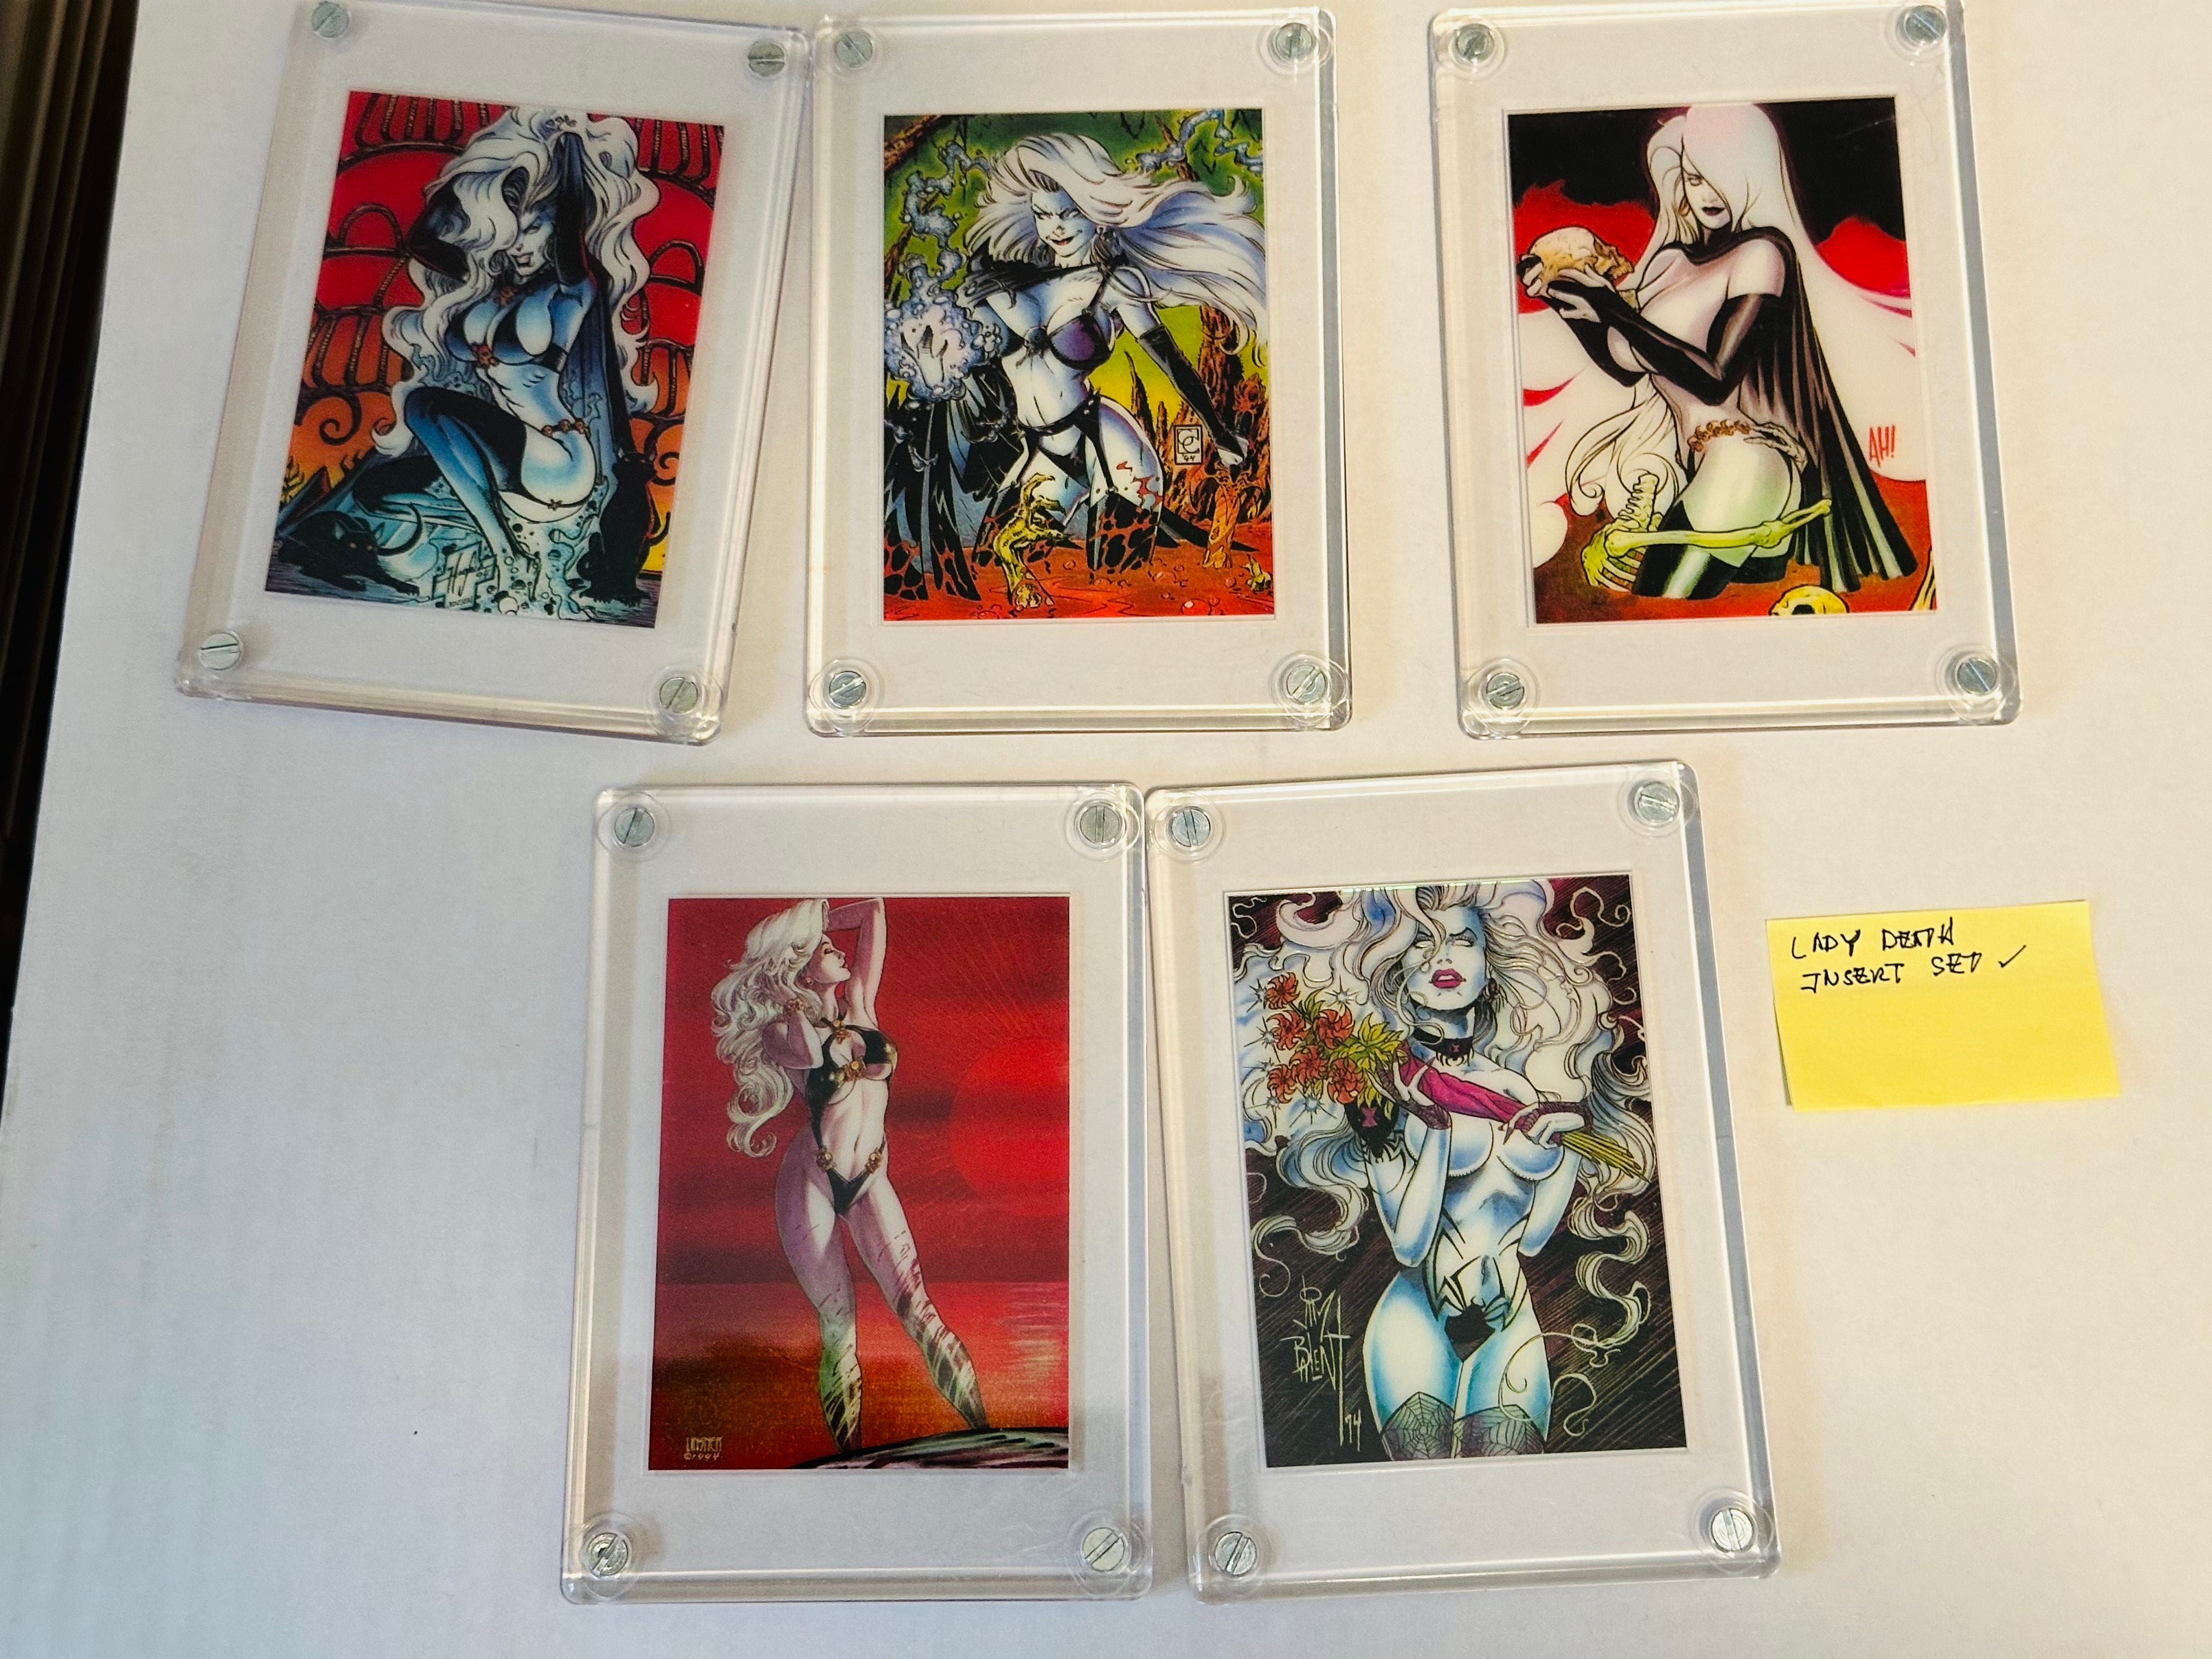 Lady Death rare Translucent insert cards set 1990s